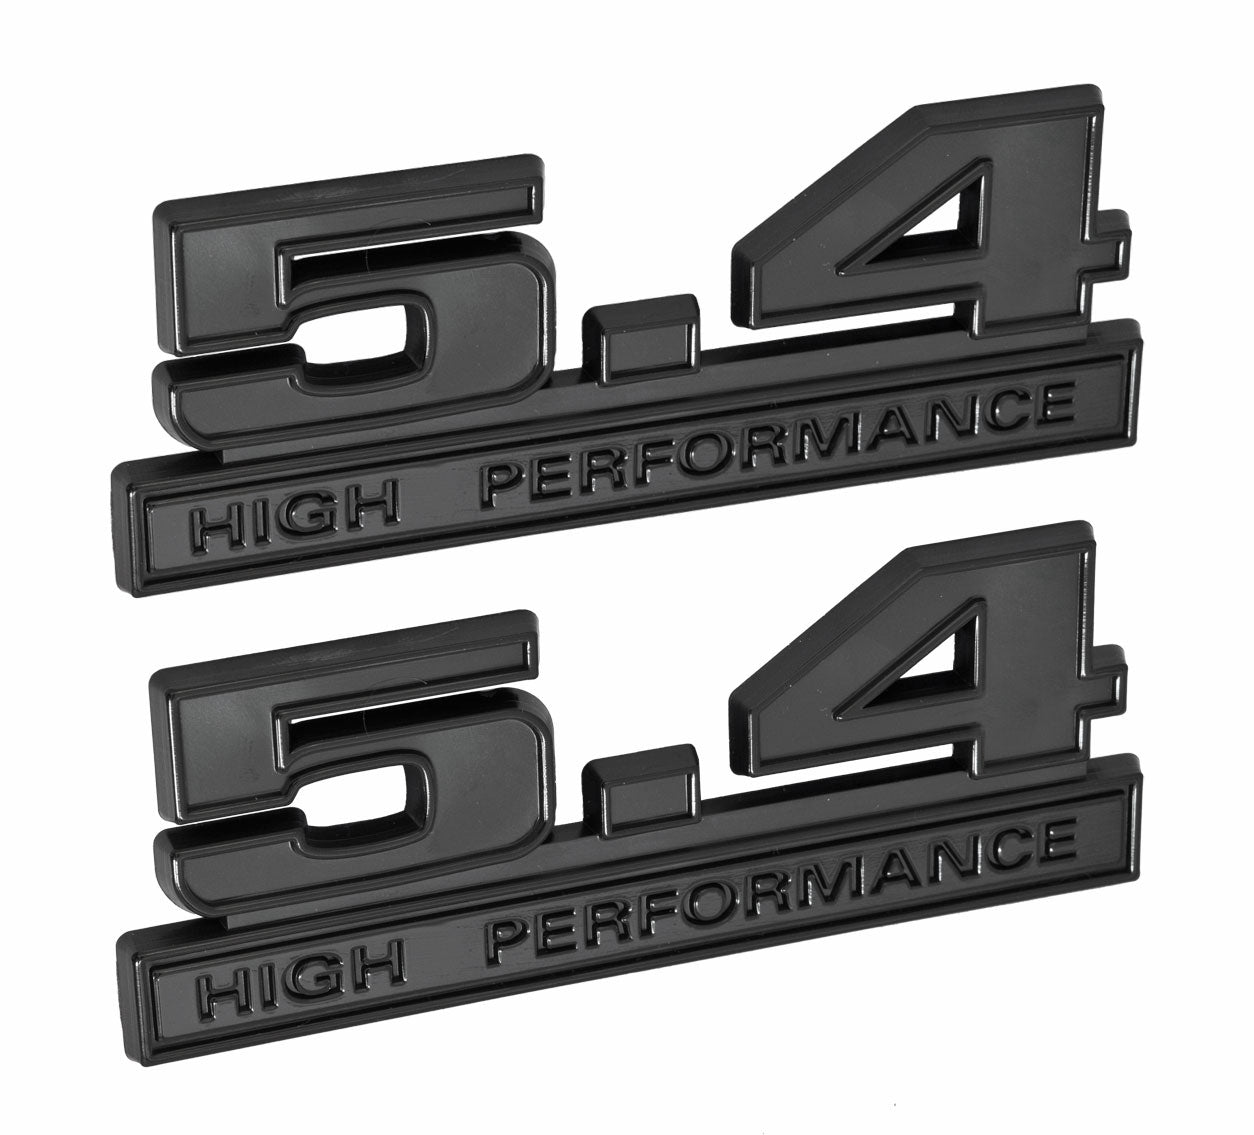 Ford Mustang Black 5.4 High Performance Fender Emblems Badges 5" x 1.75" - Pair